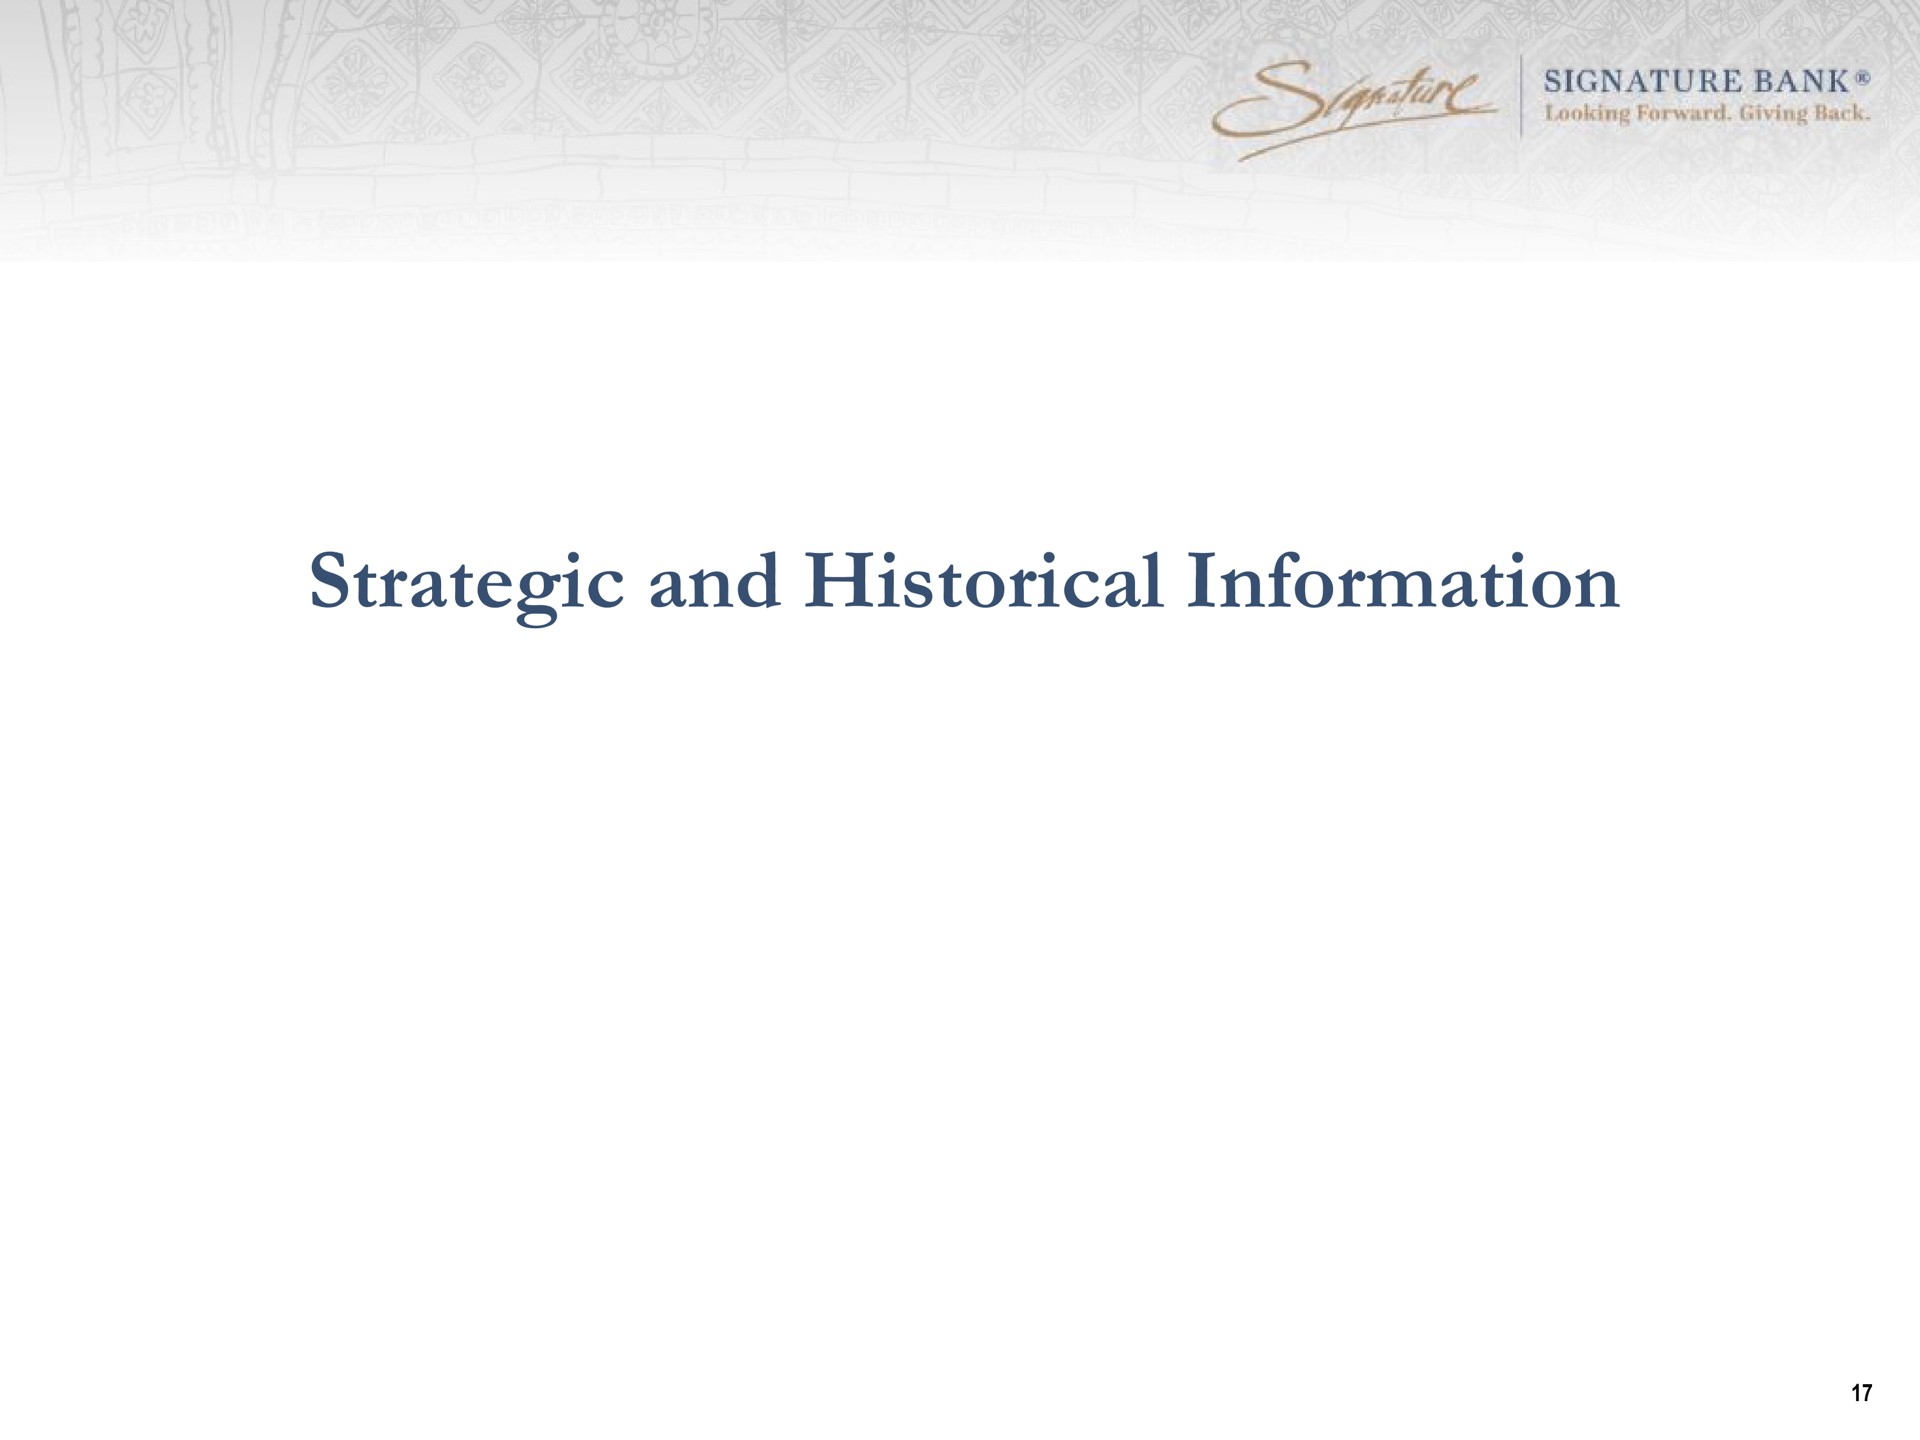 strategic and historical information signature bank | Signature Bank